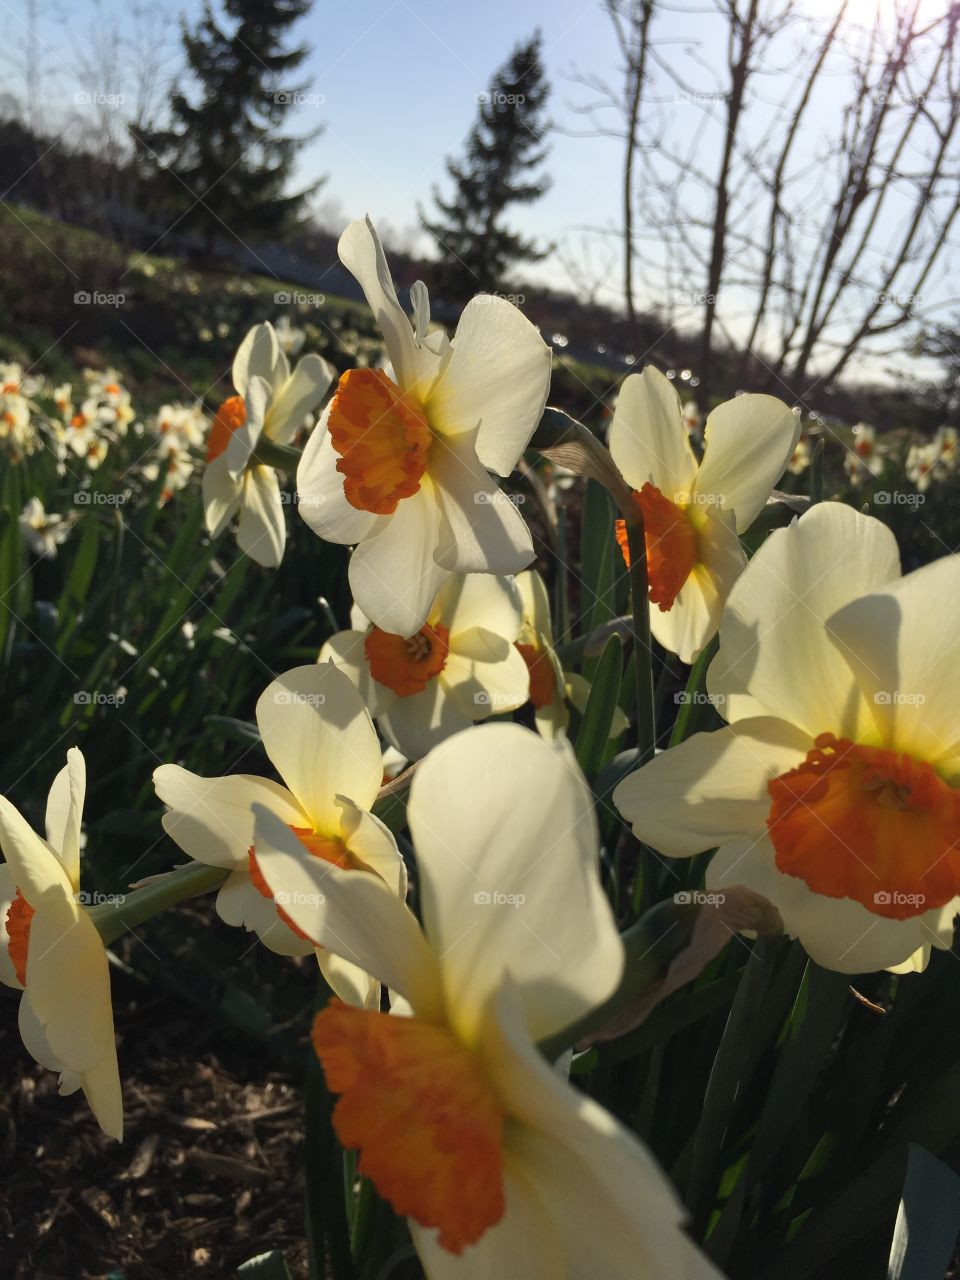 Gorgeous daffodils.